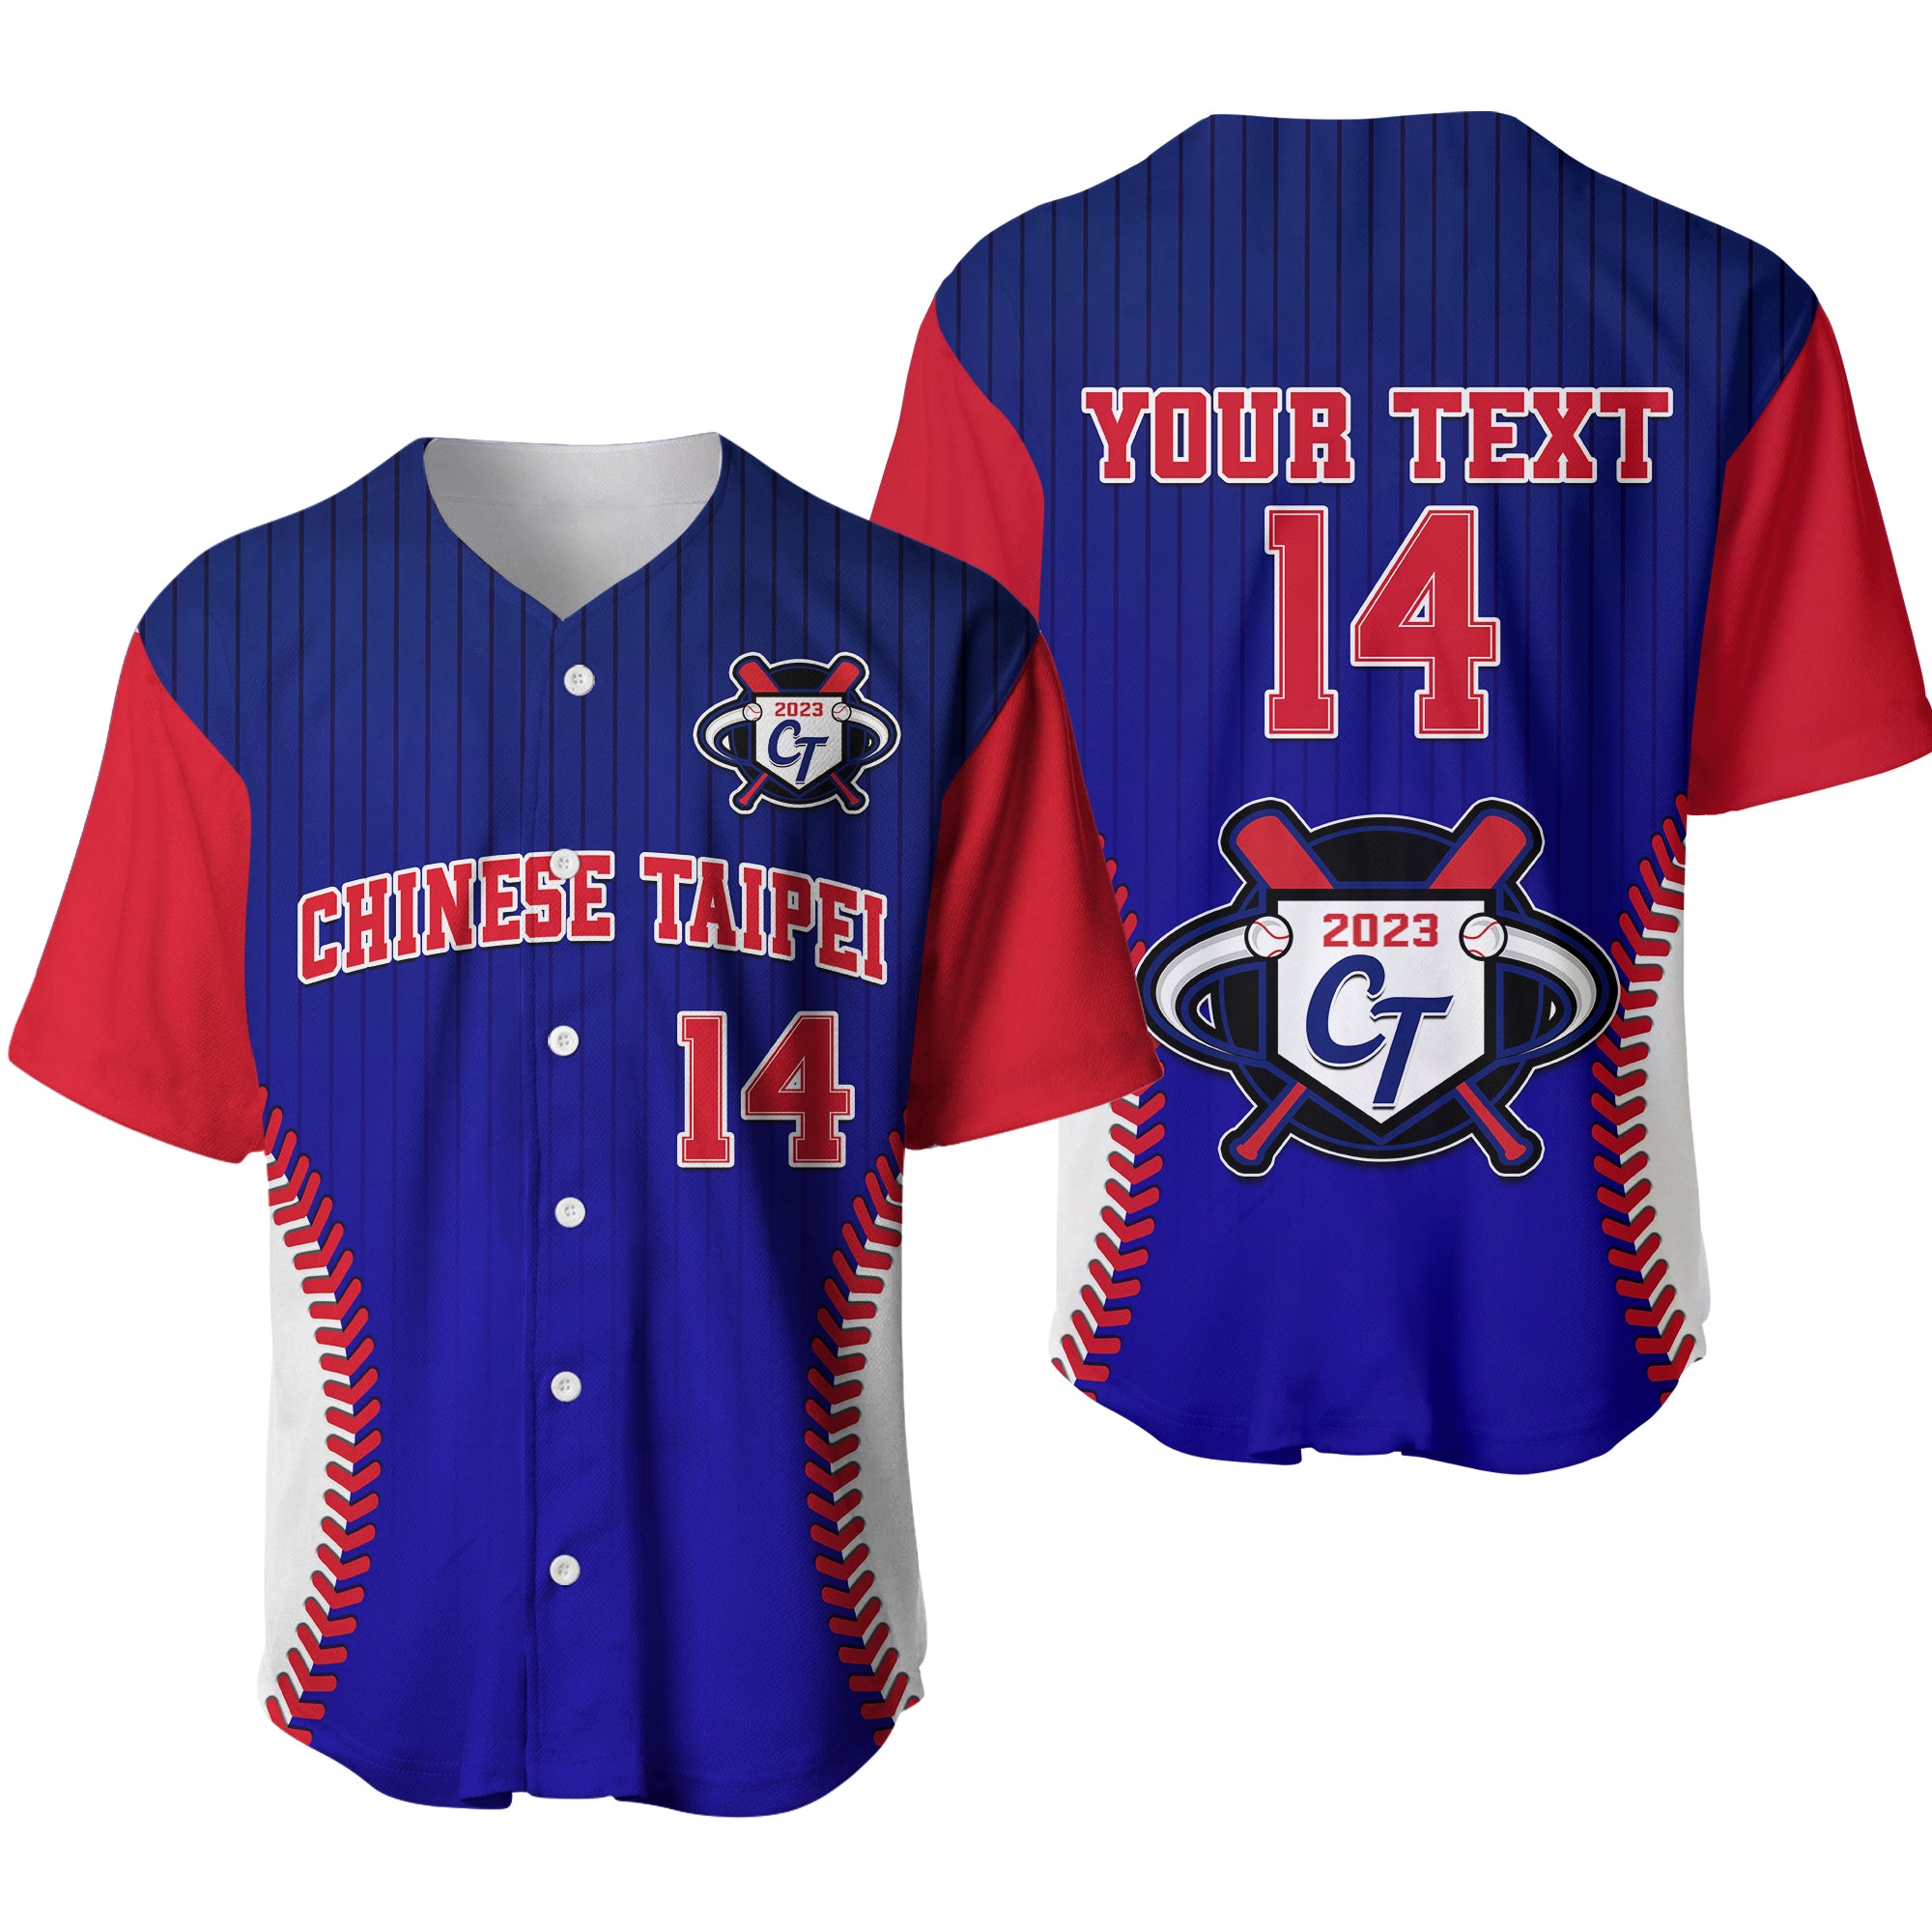 (Custom Text And Number) Chinese Taipei 2023 Baseball Jersey Baseball Ver.01 LT14